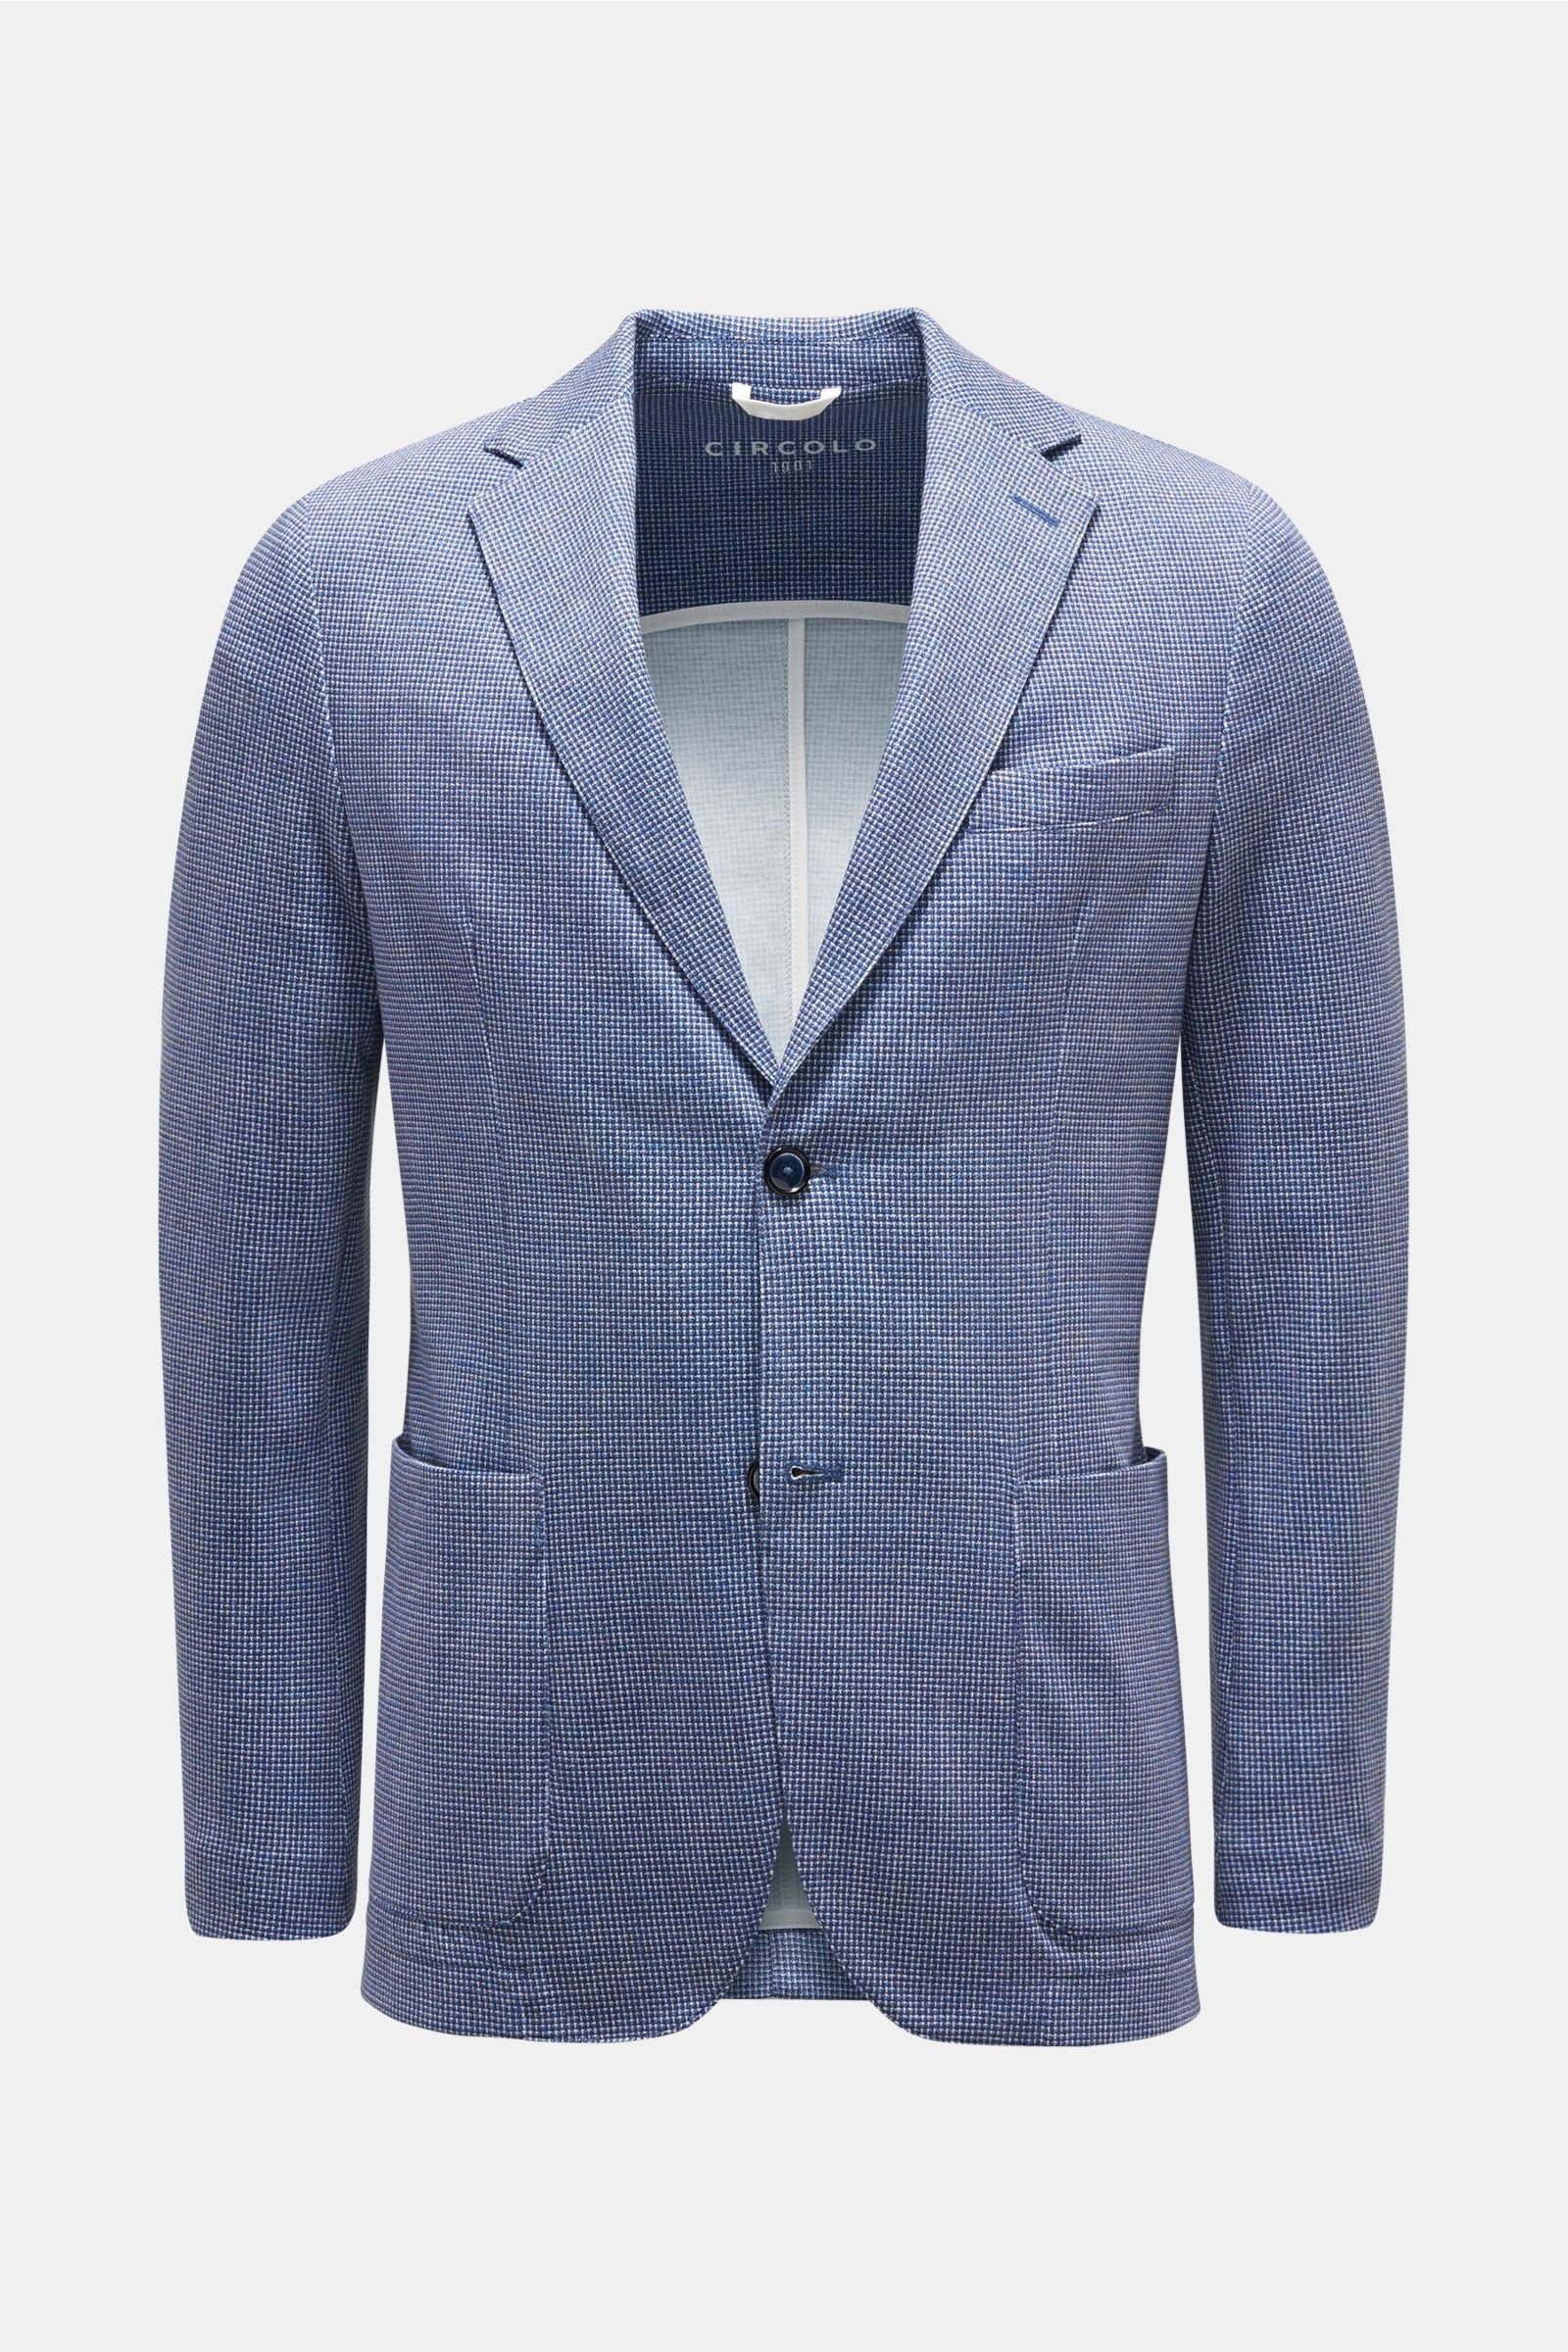 Jersey smart-casual jacket dark blue/navy patterned